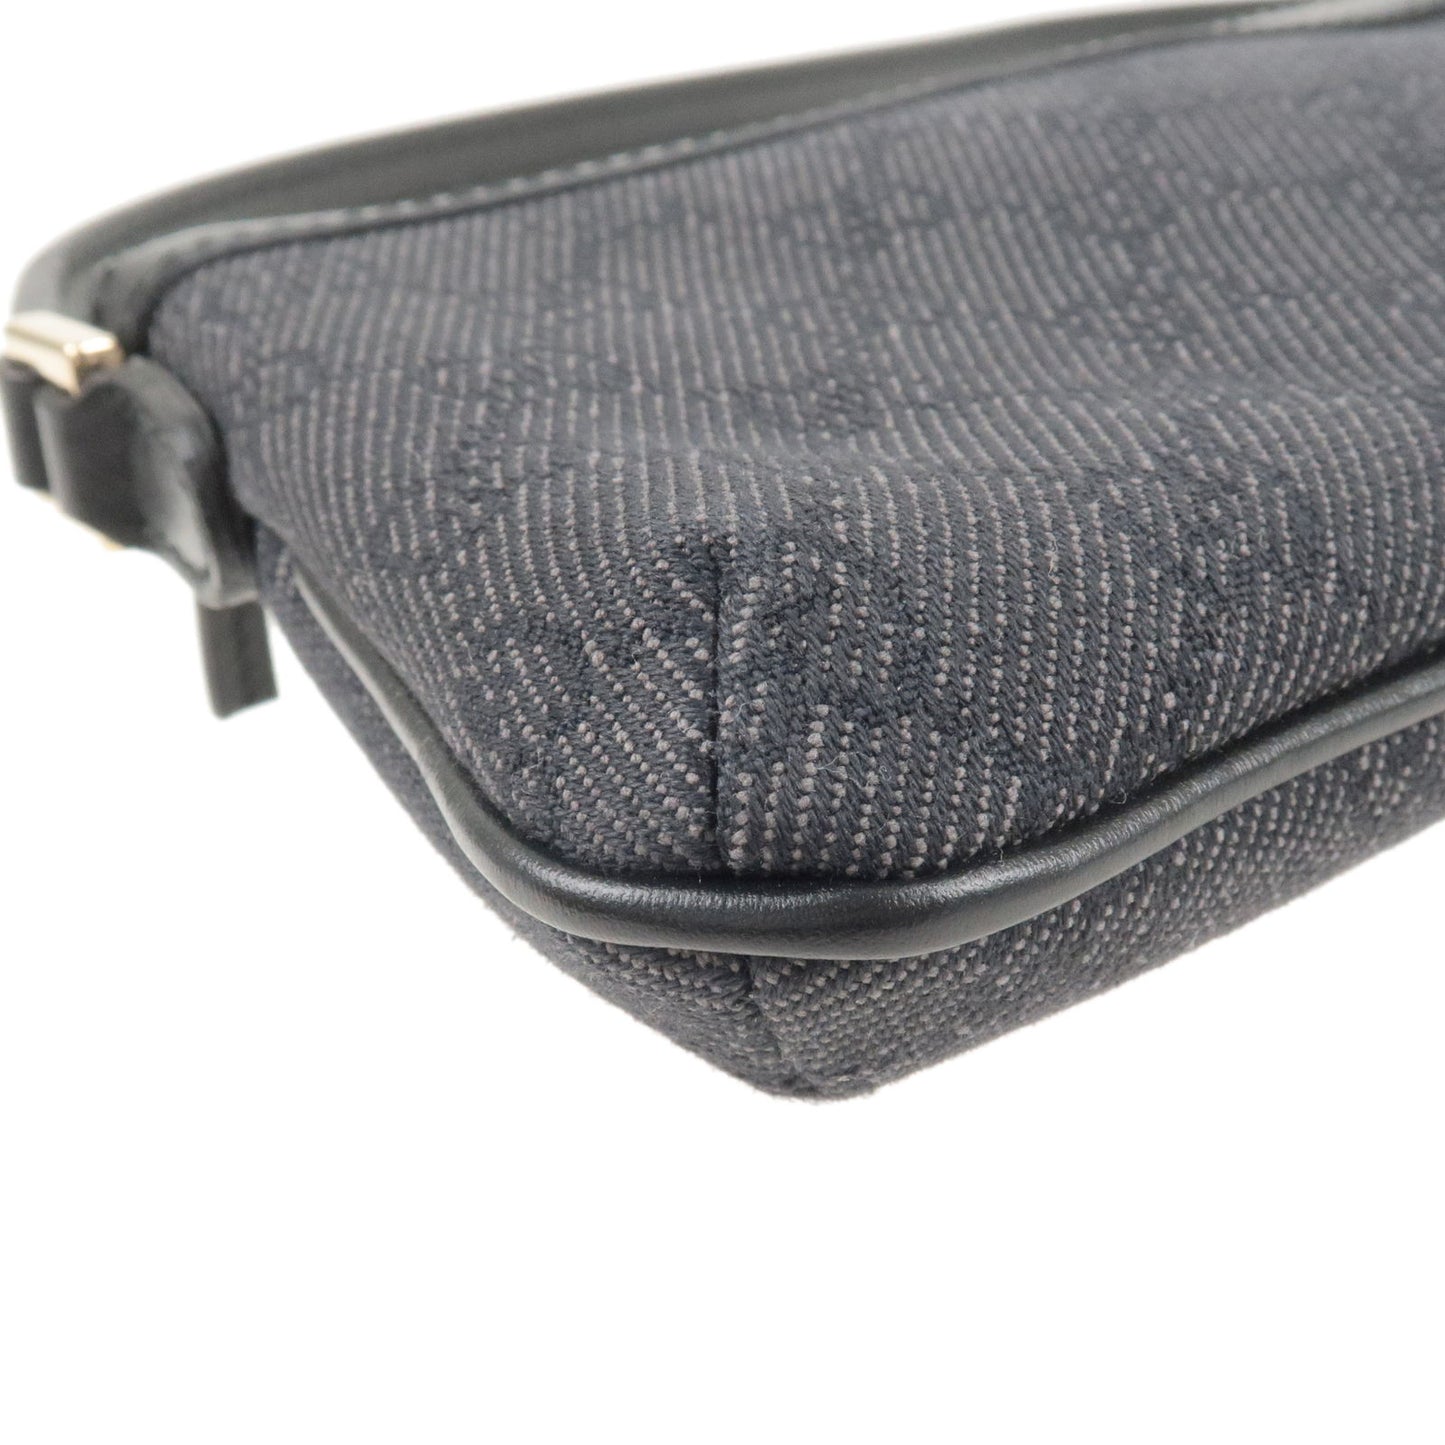 GUCCI GG Denim Small Leather Shoulder Bag Pouch Black 272381